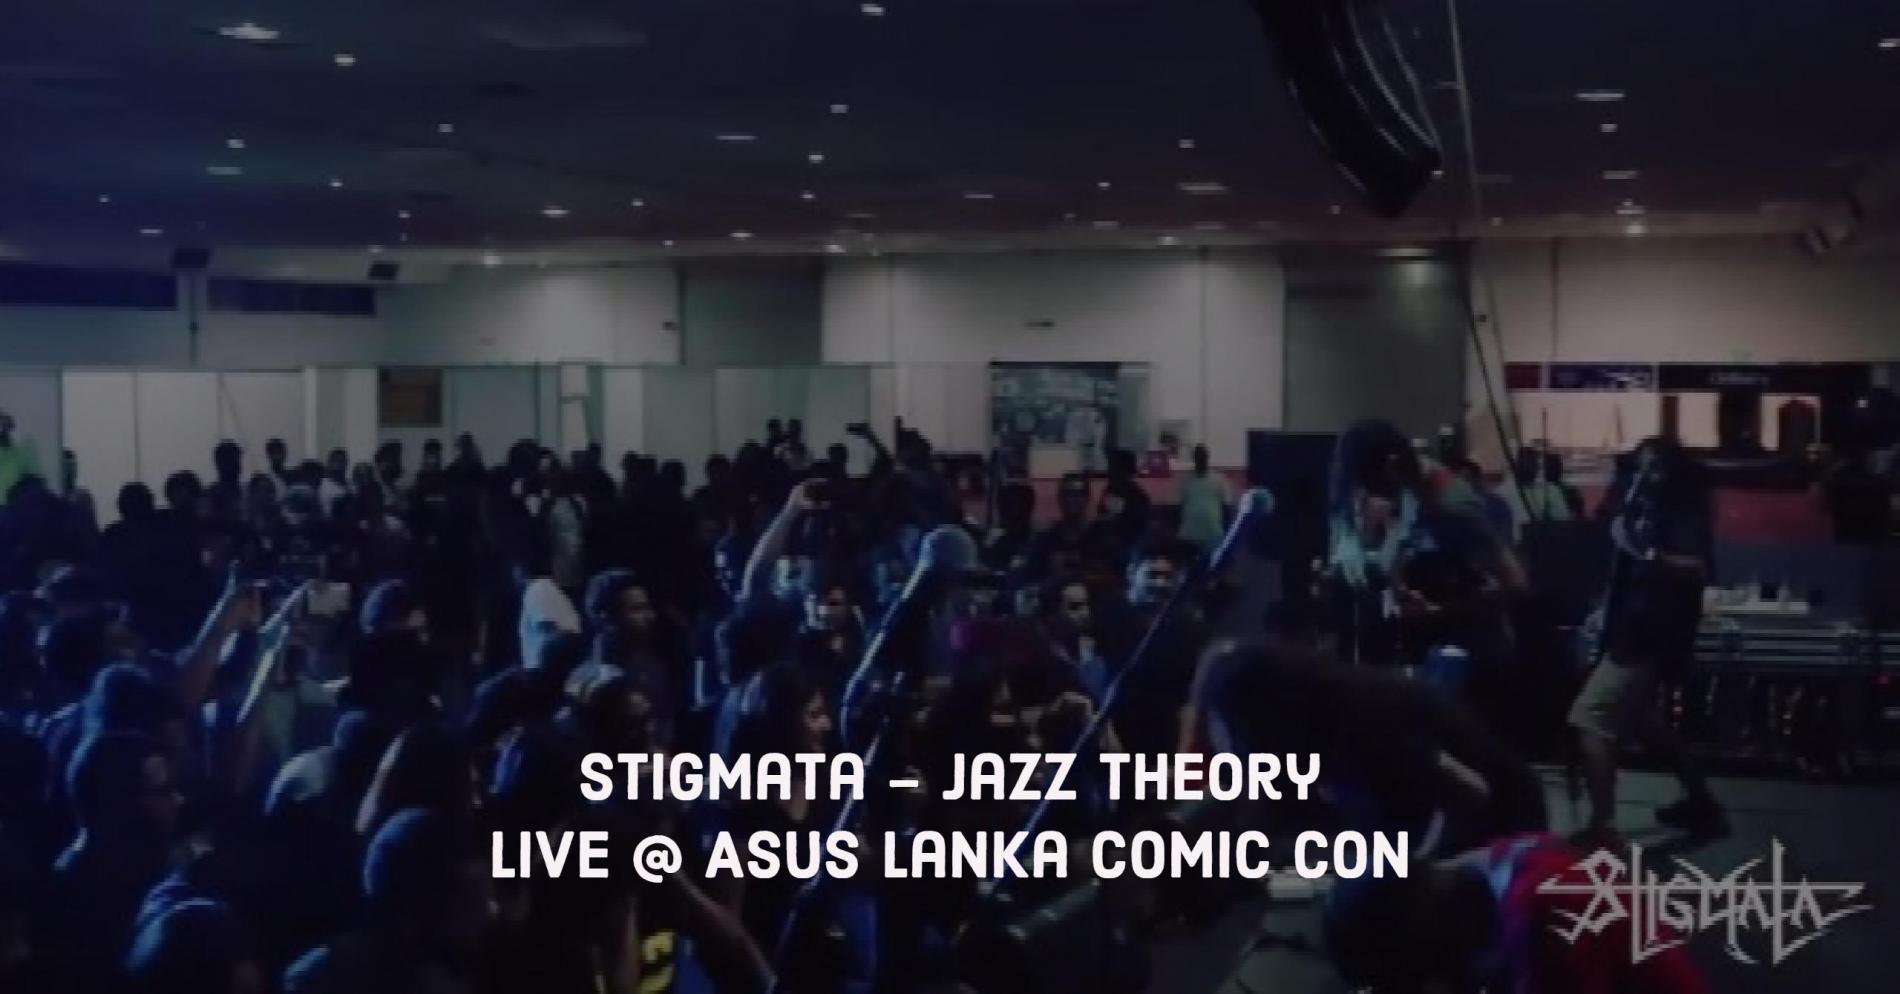 Stigmata – Jazz Theory (Live @ Asus Lanka Comic Con)